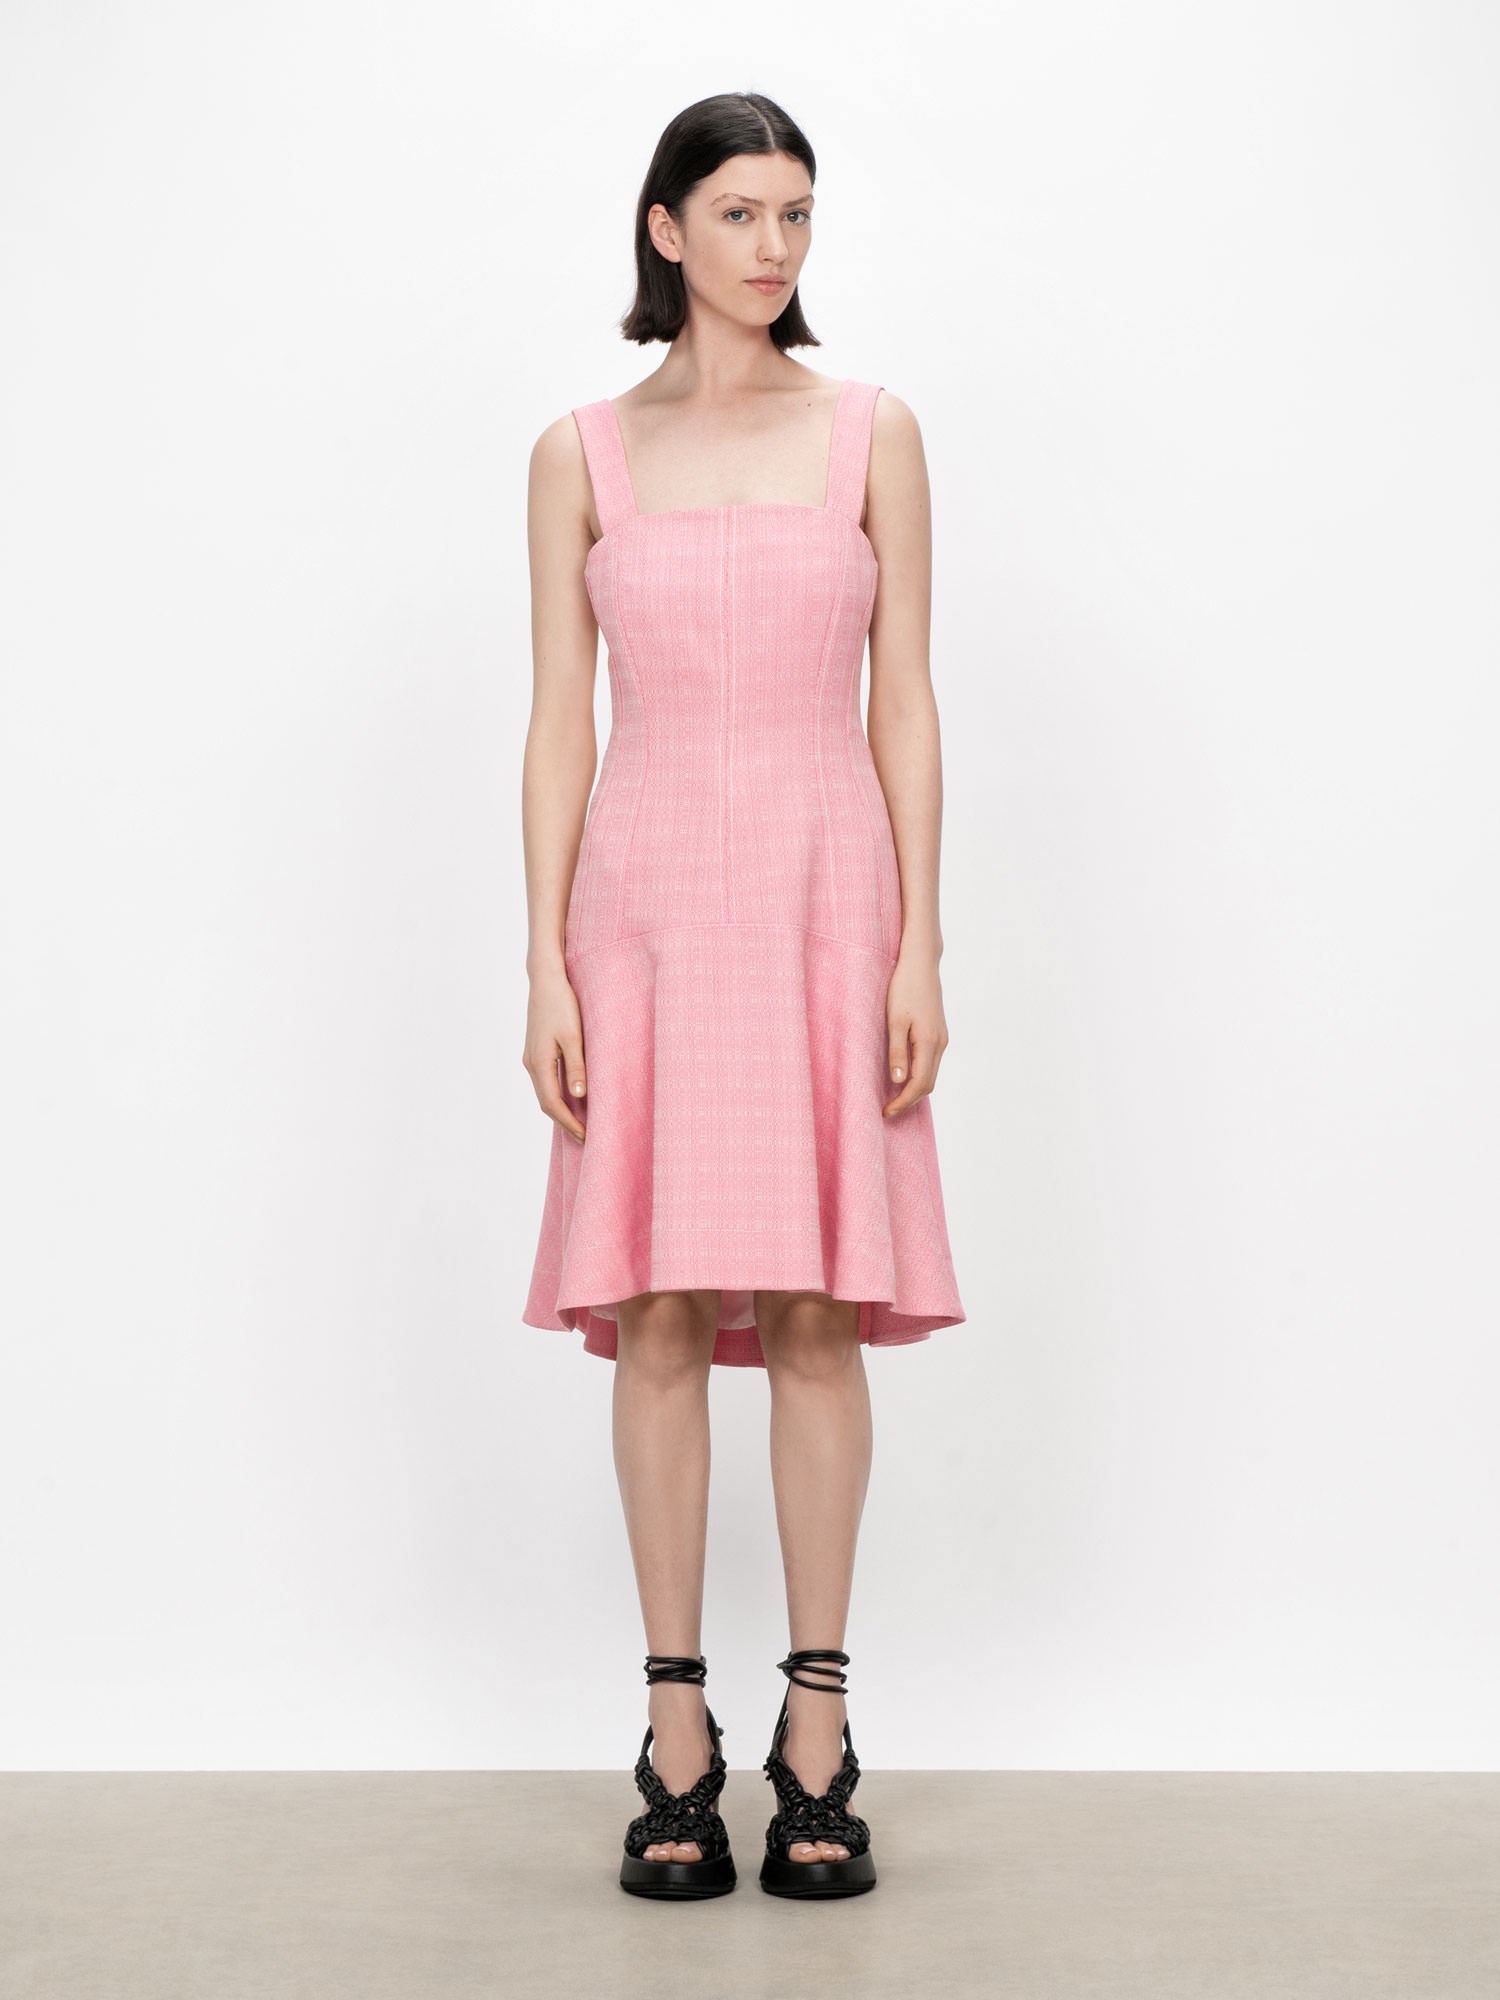 Graphic Tweed Apron Dress | Buy Dresses Online - Veronika Maine